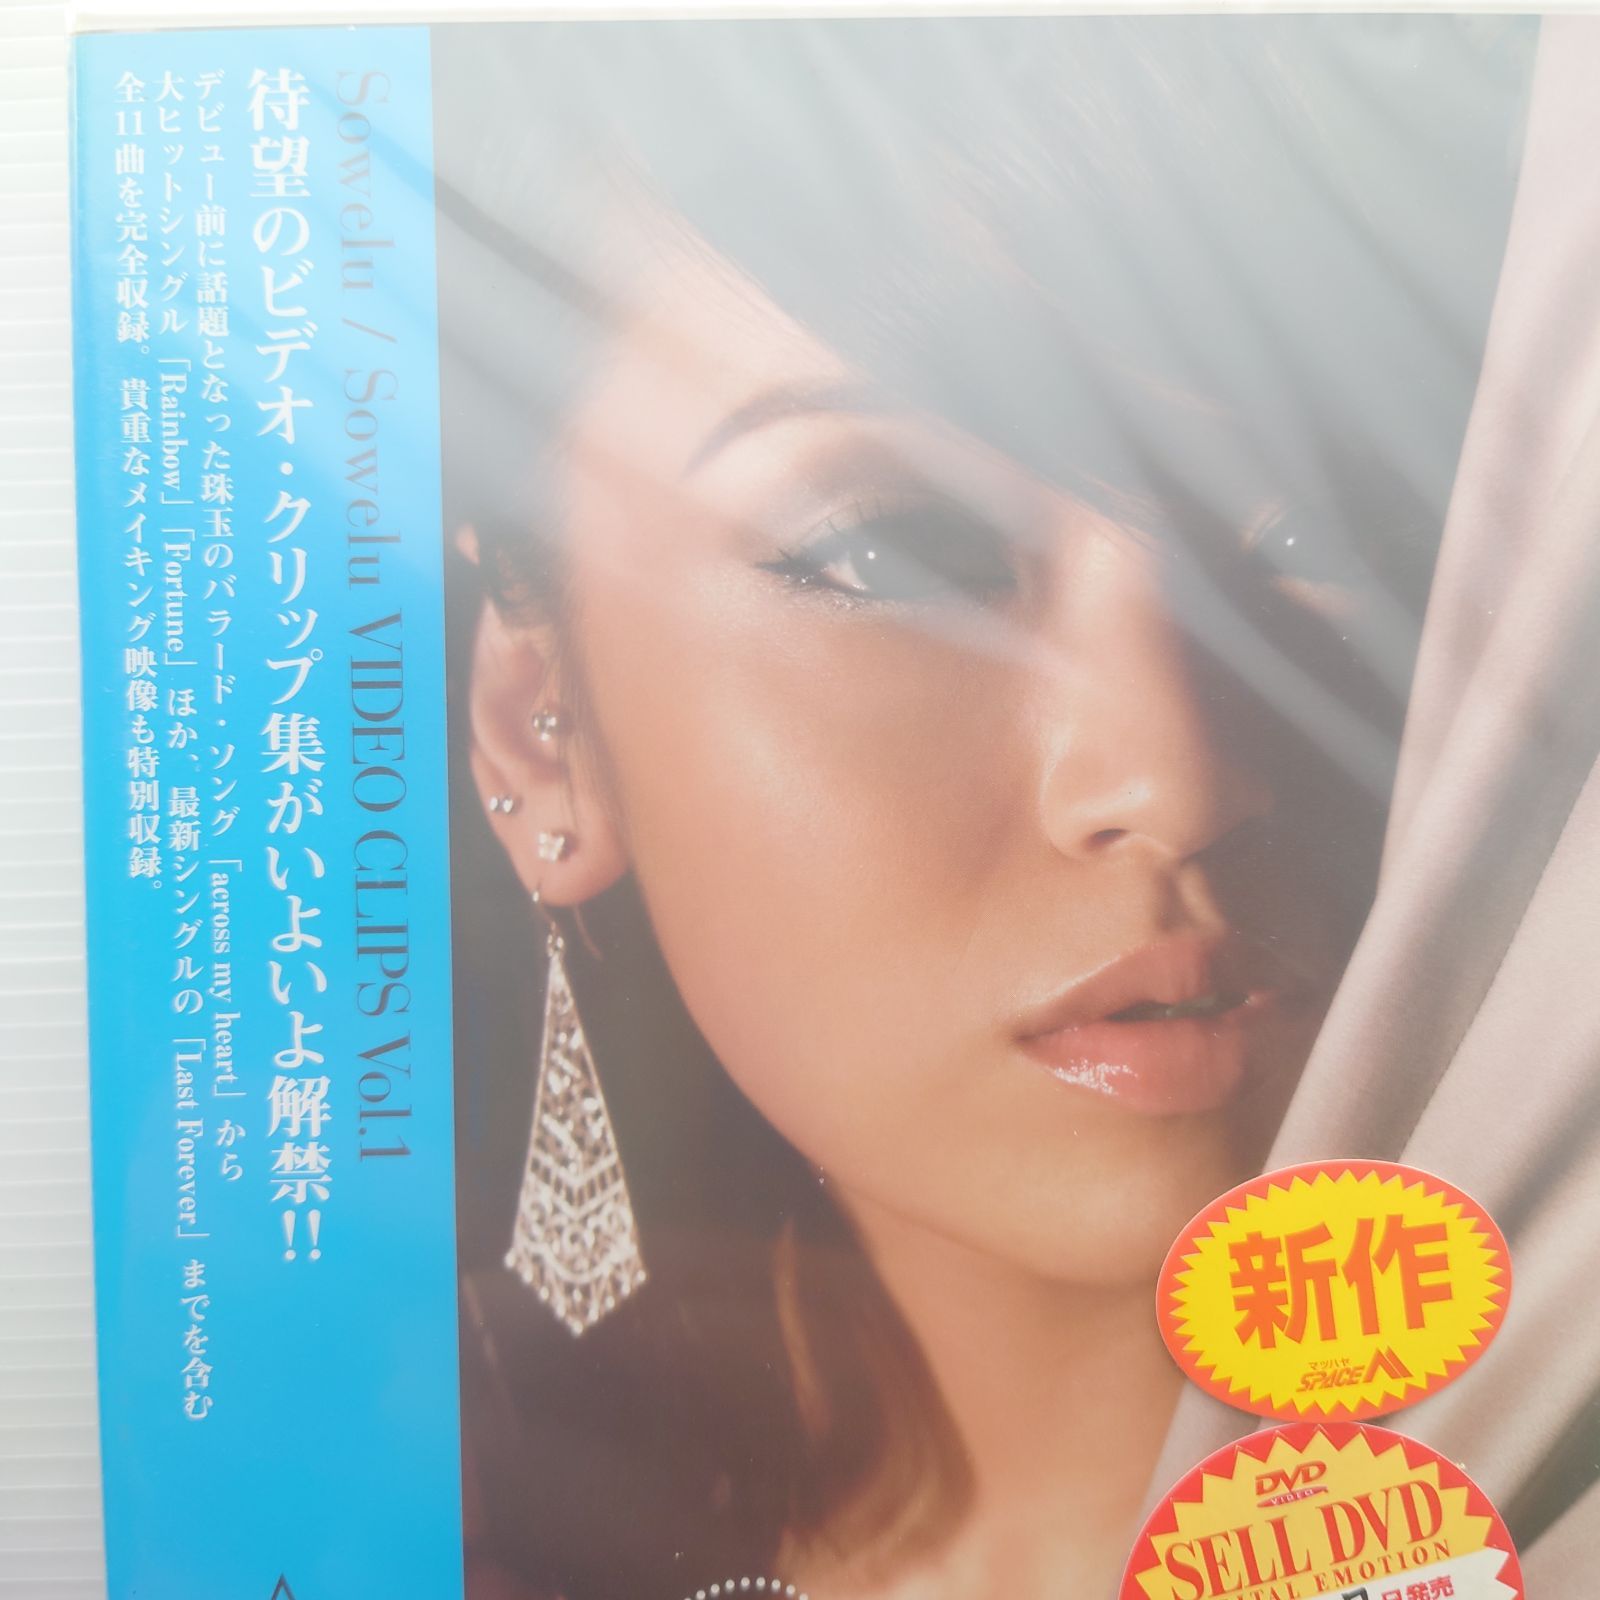 【DVD】Sowelu/ソエル　VIDEO CLIPS Vol.1【2005/新品未開封】